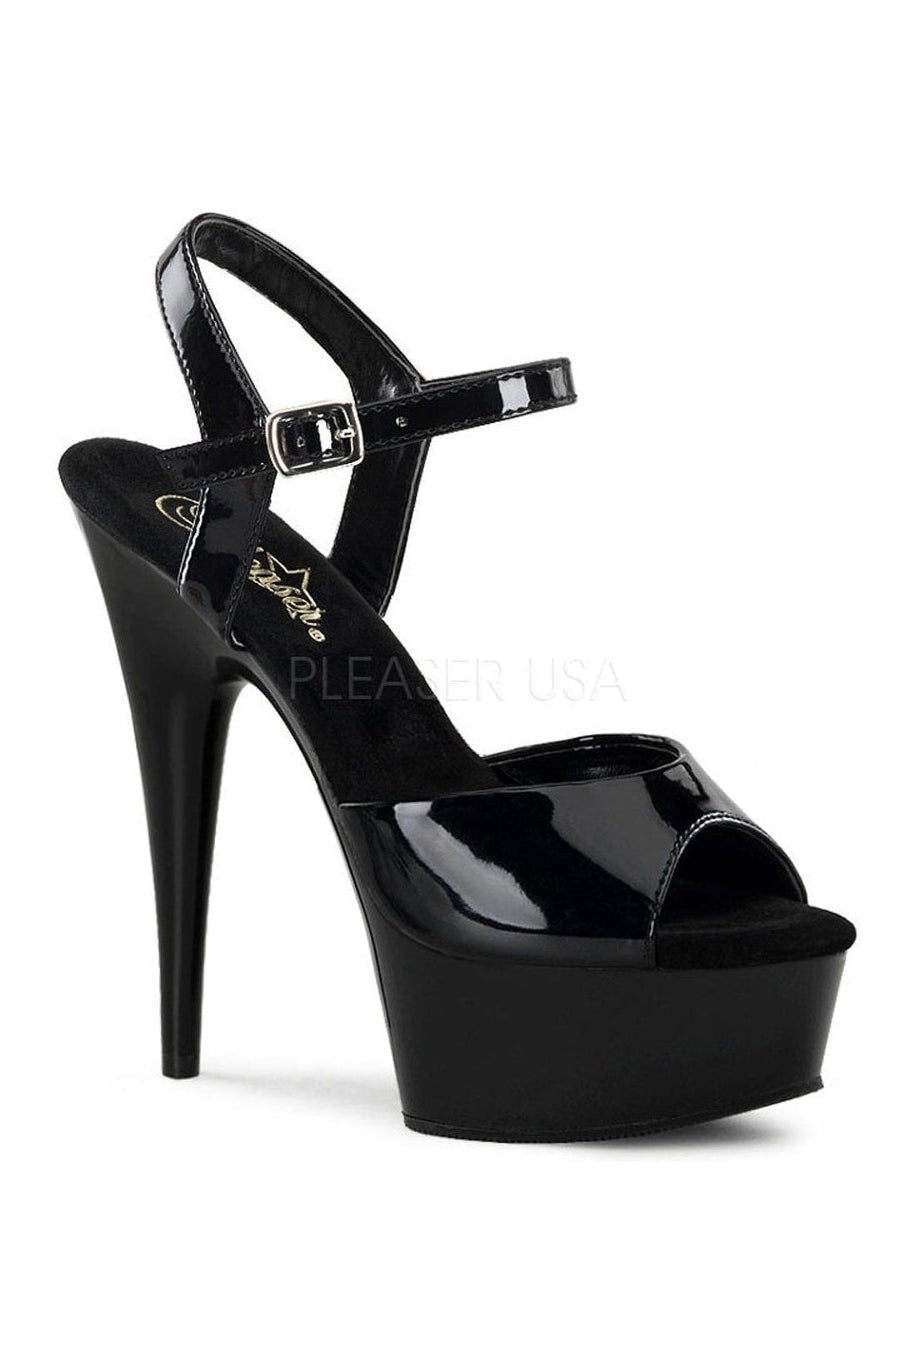 DELIGHT-609 Platform Sandal | Black Patent-Pleaser-Black-Sandals-SEXYSHOES.COM